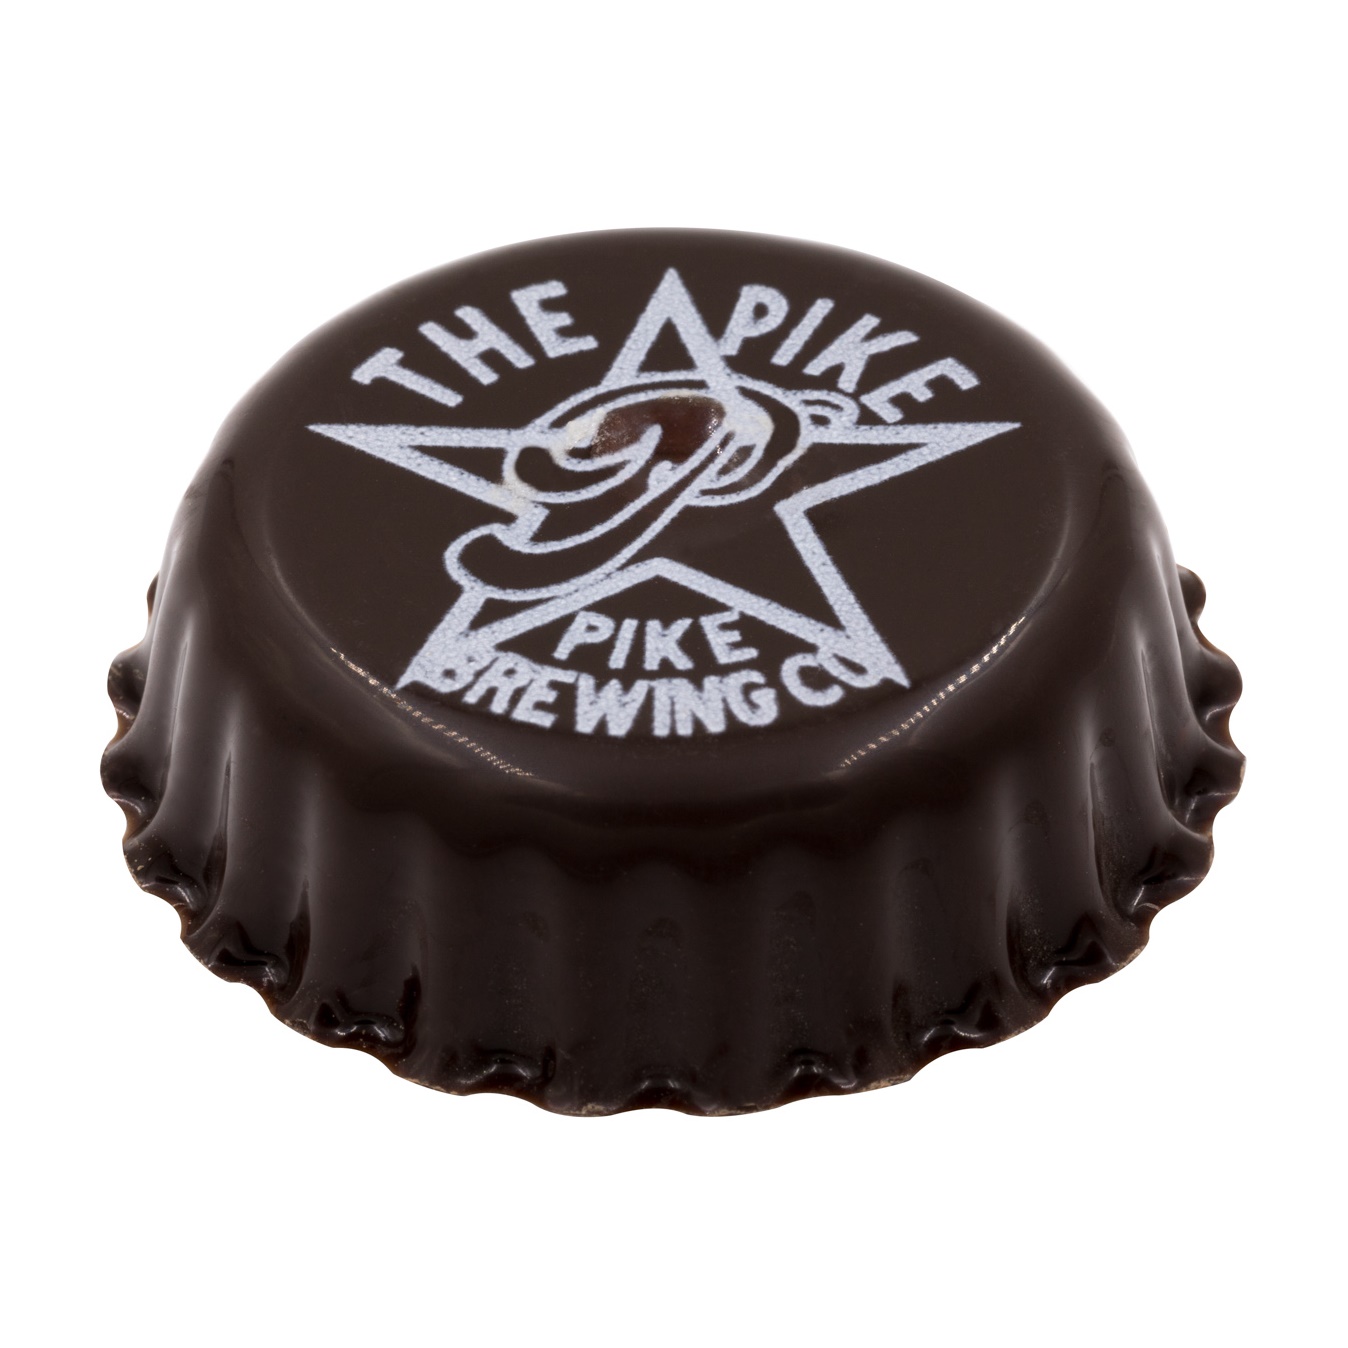 Pike's Monk's Uncle Tripel Ale